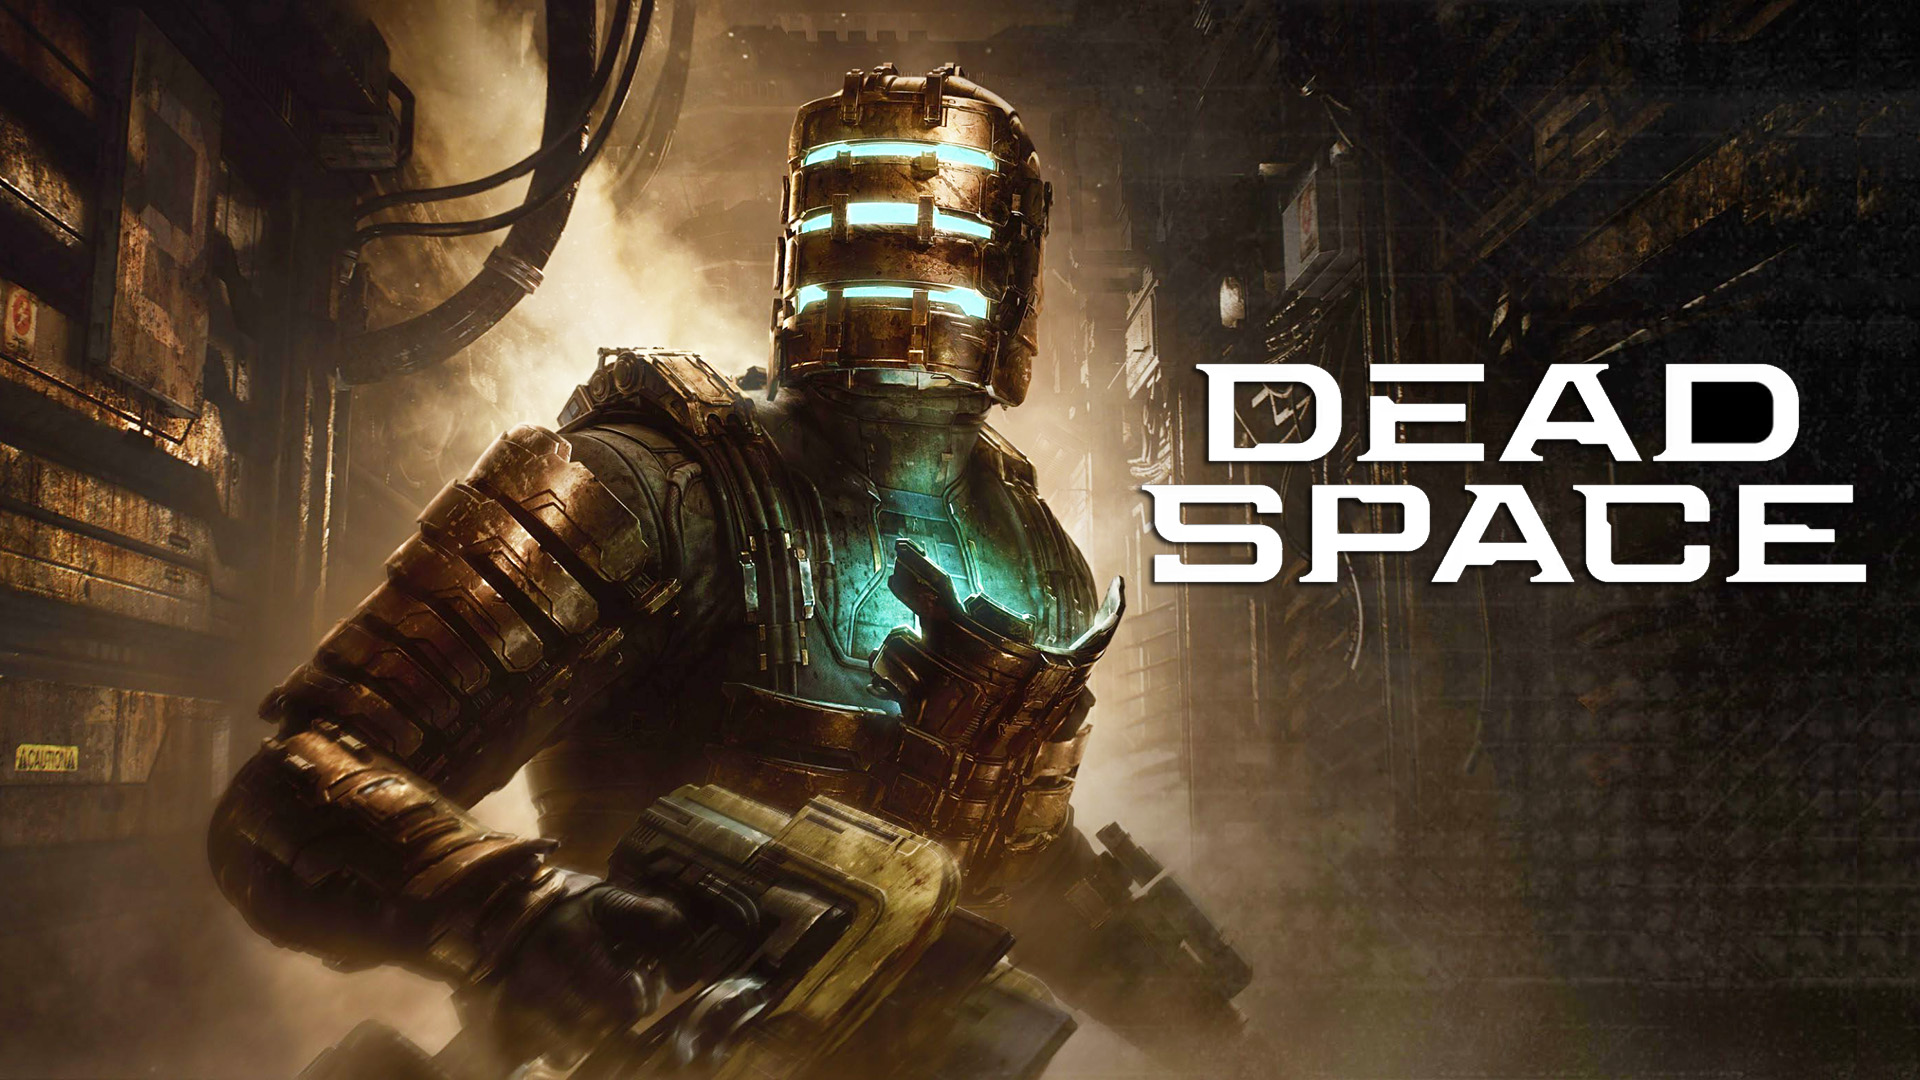 Dead Space 4 PS5  Trailer 2022 